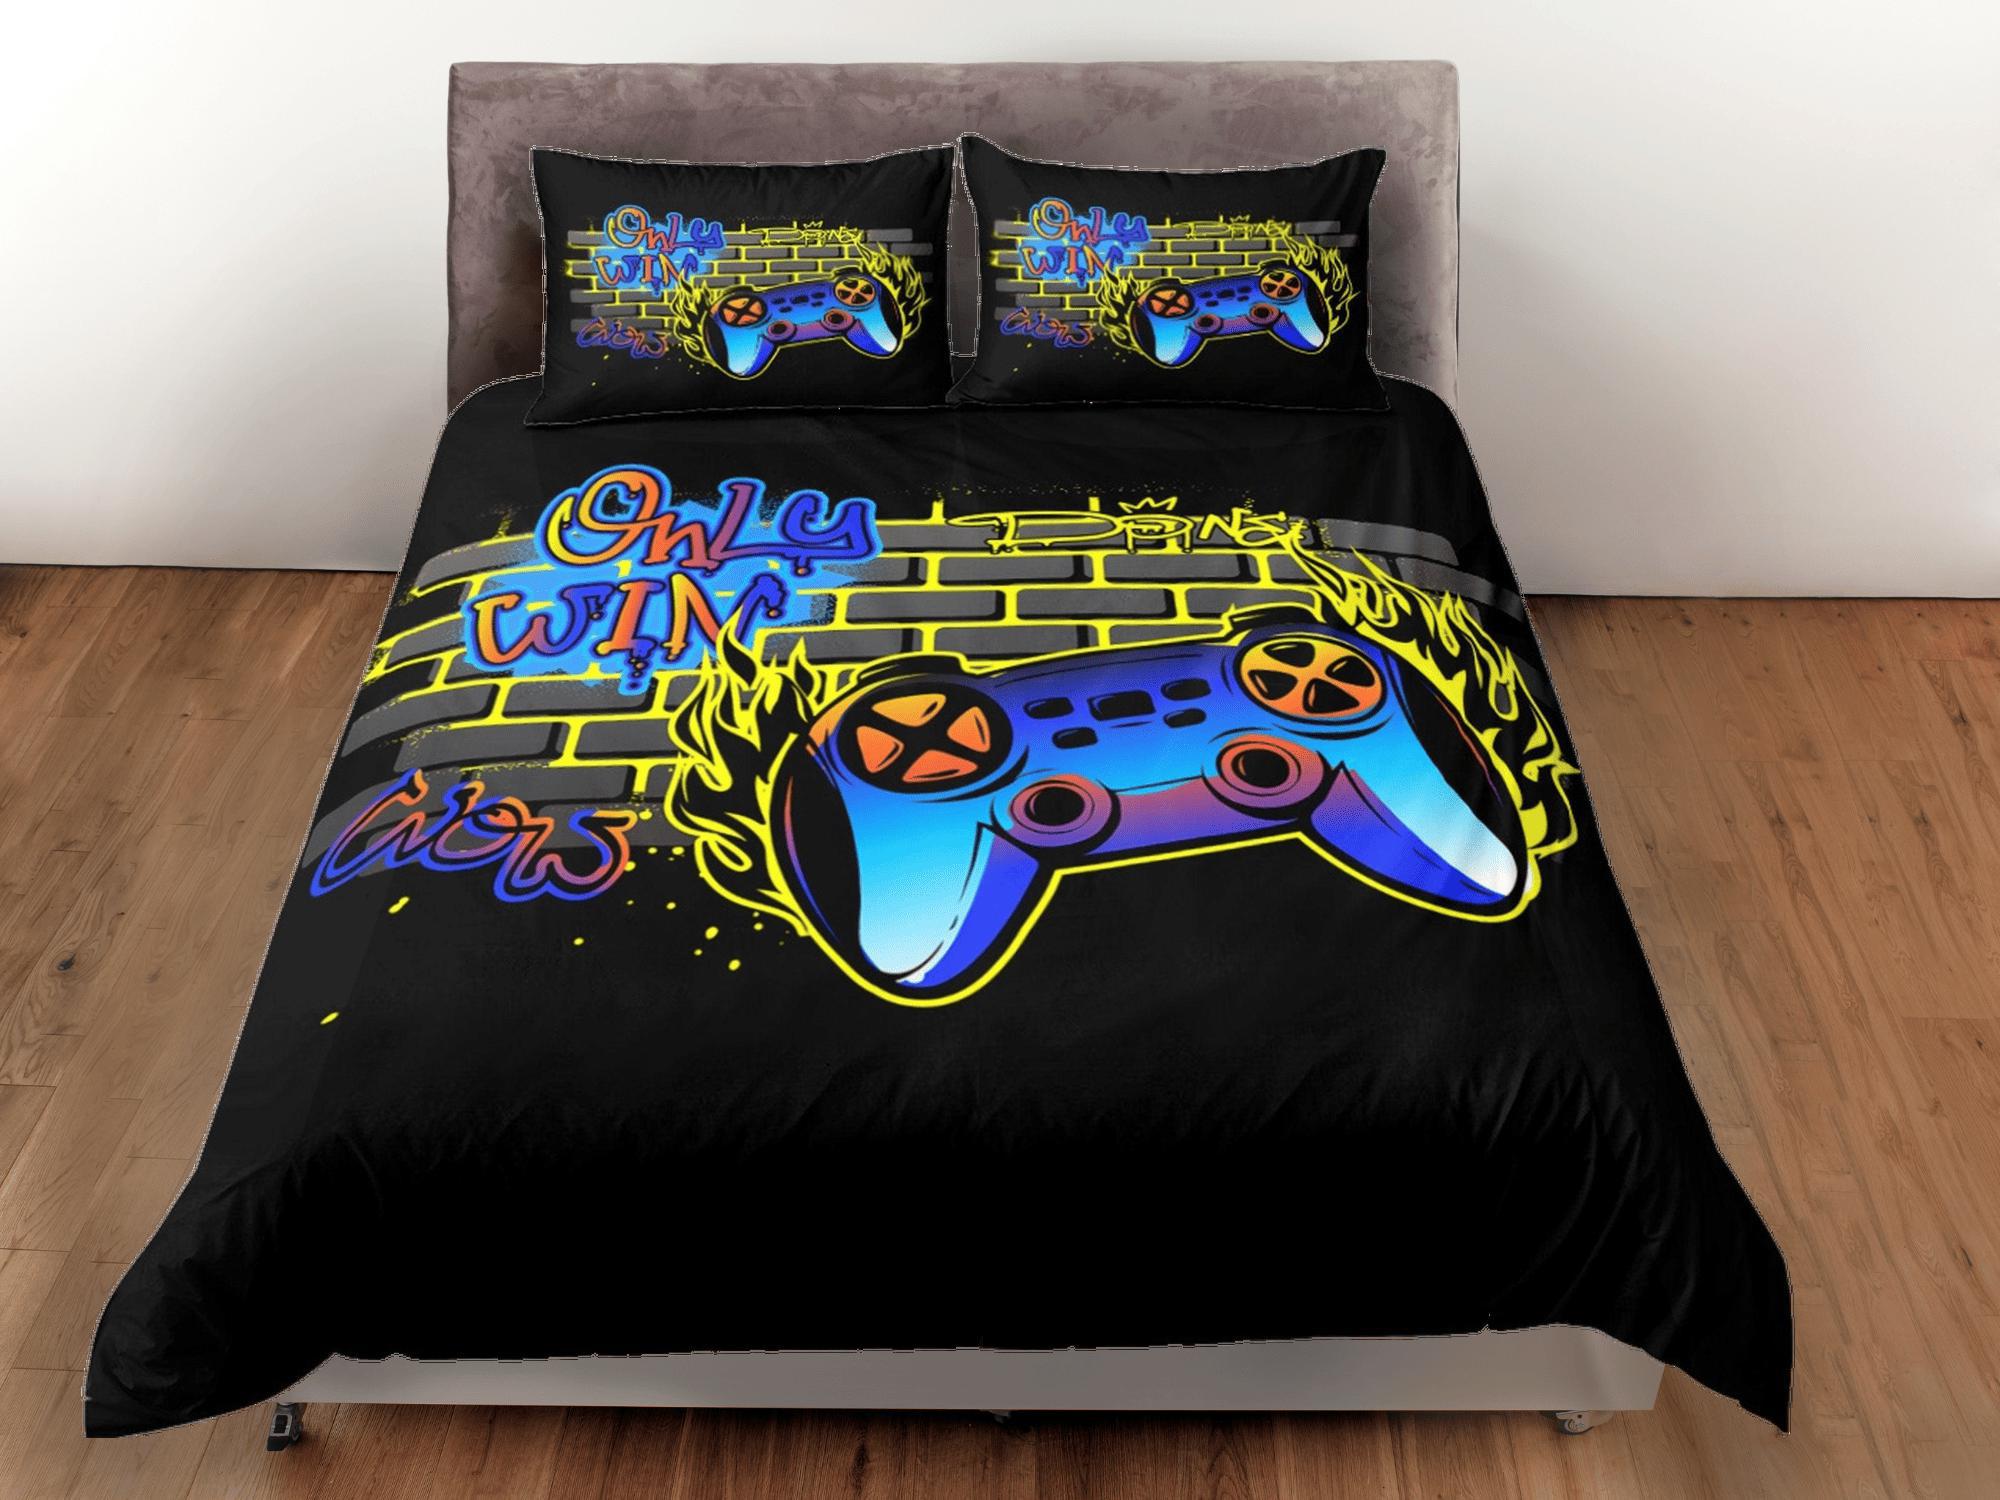 daintyduvet Video Game Duvet Cover Set Colorful Bedspread for Boys, Dorm Bedding Pillowcase